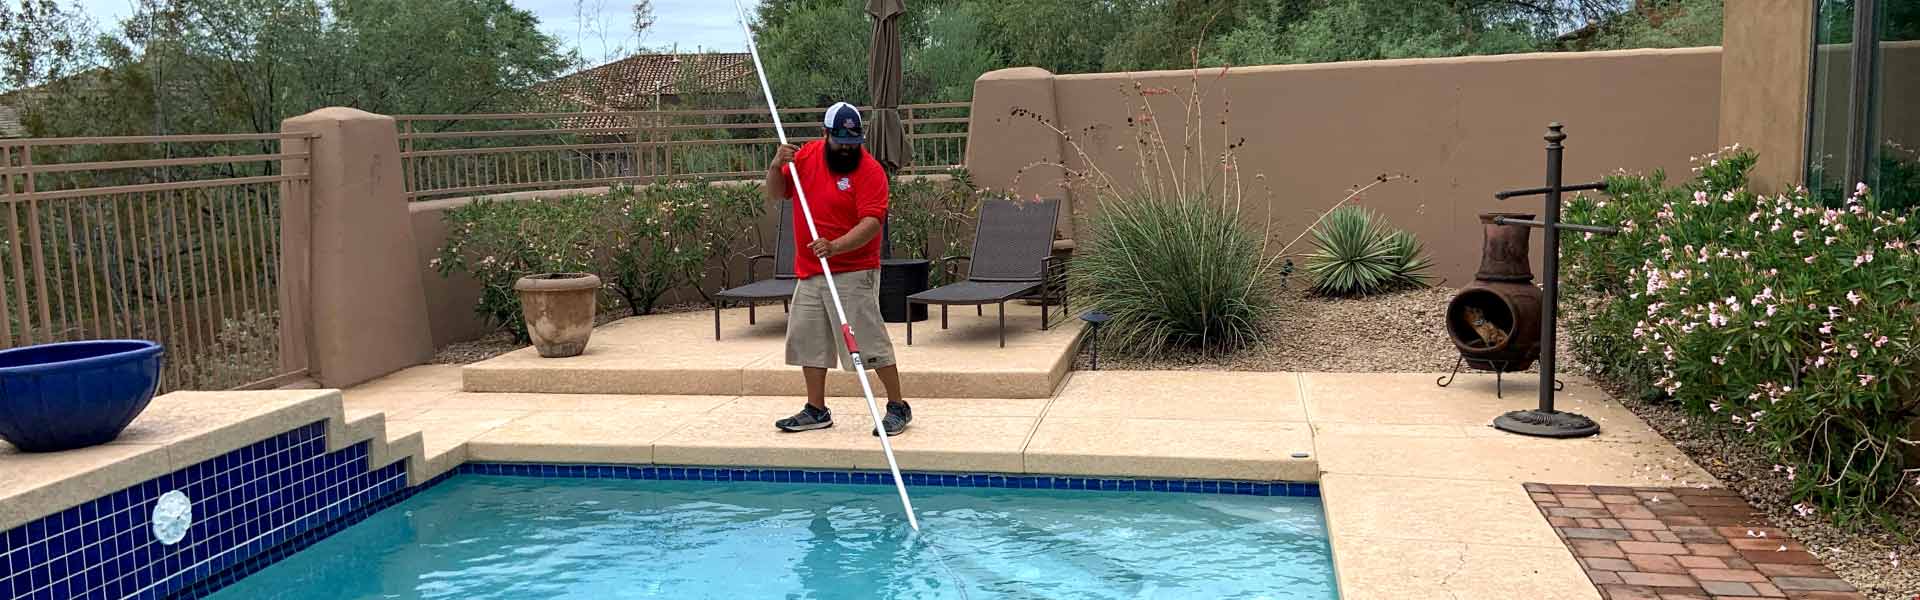 Pool Scouts technician using vacuum in swimming pool